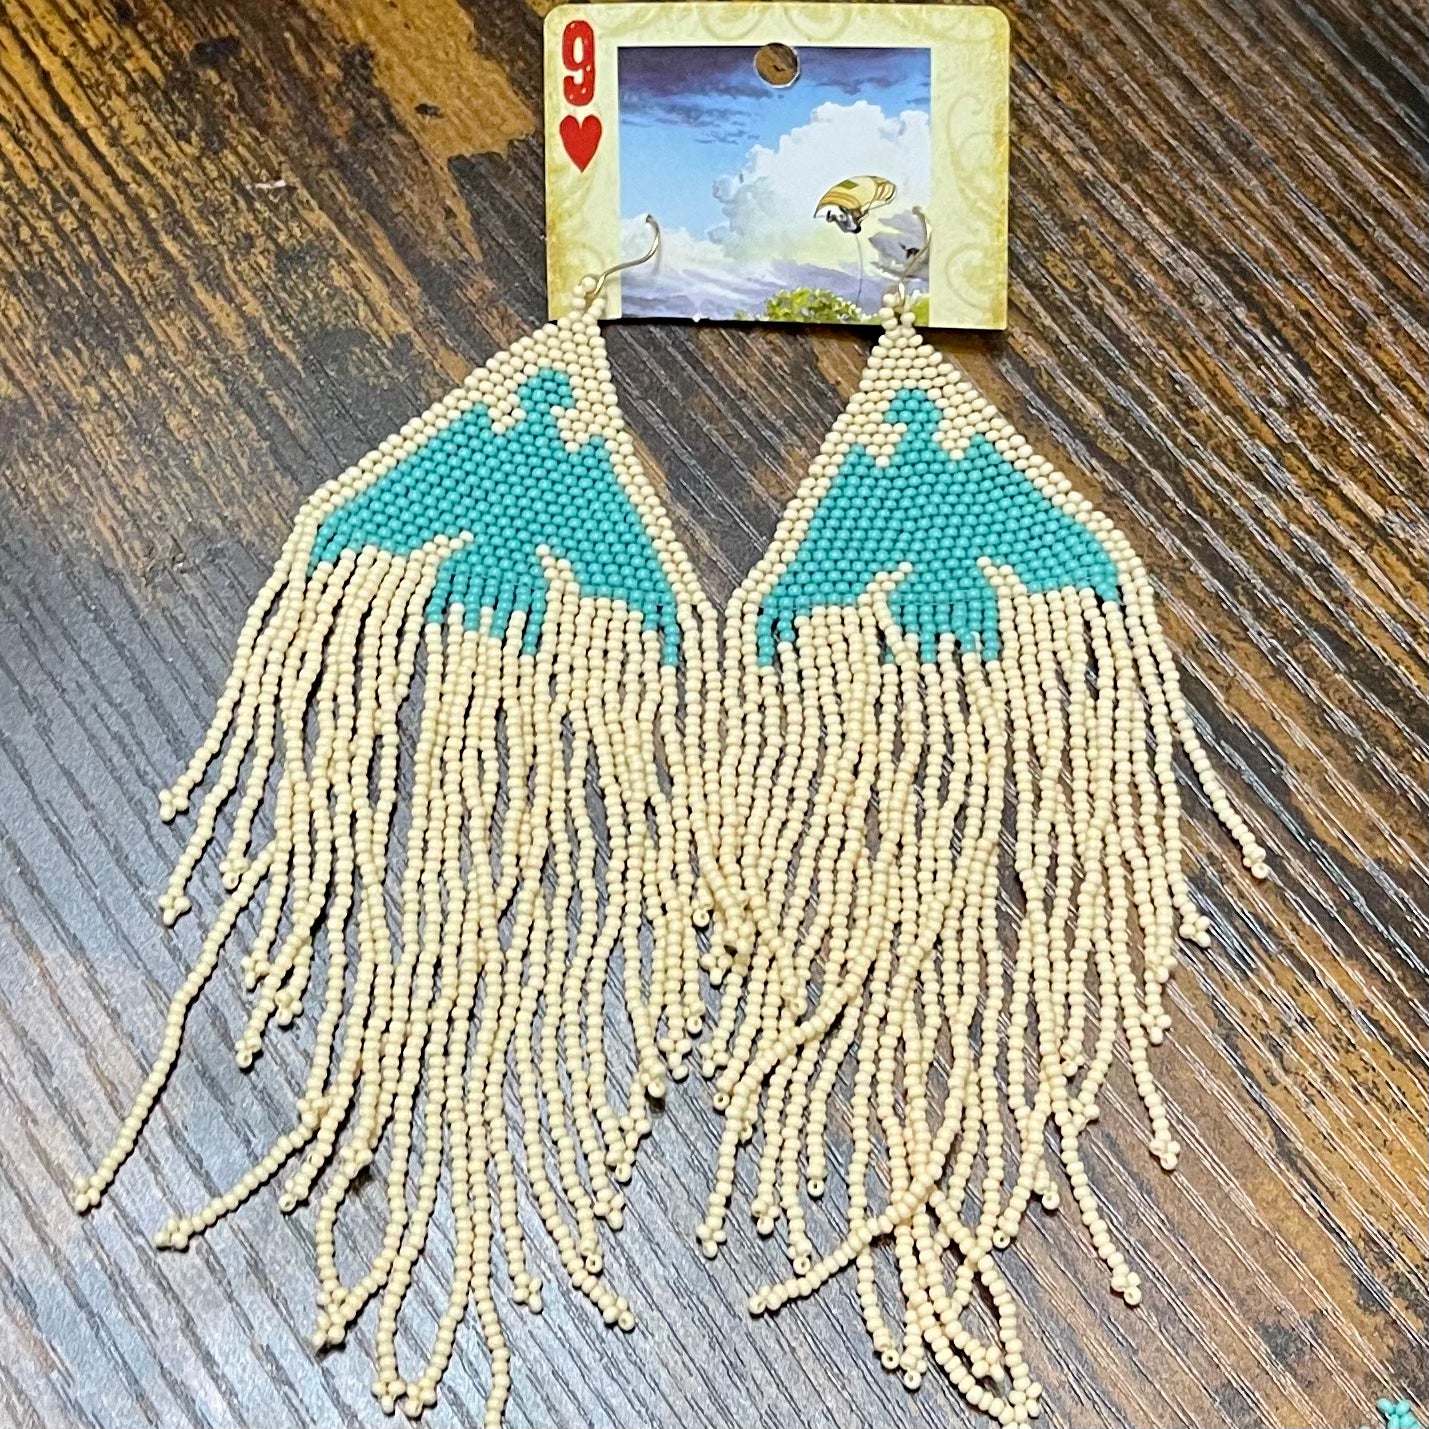 Beaded thunderbird earrings